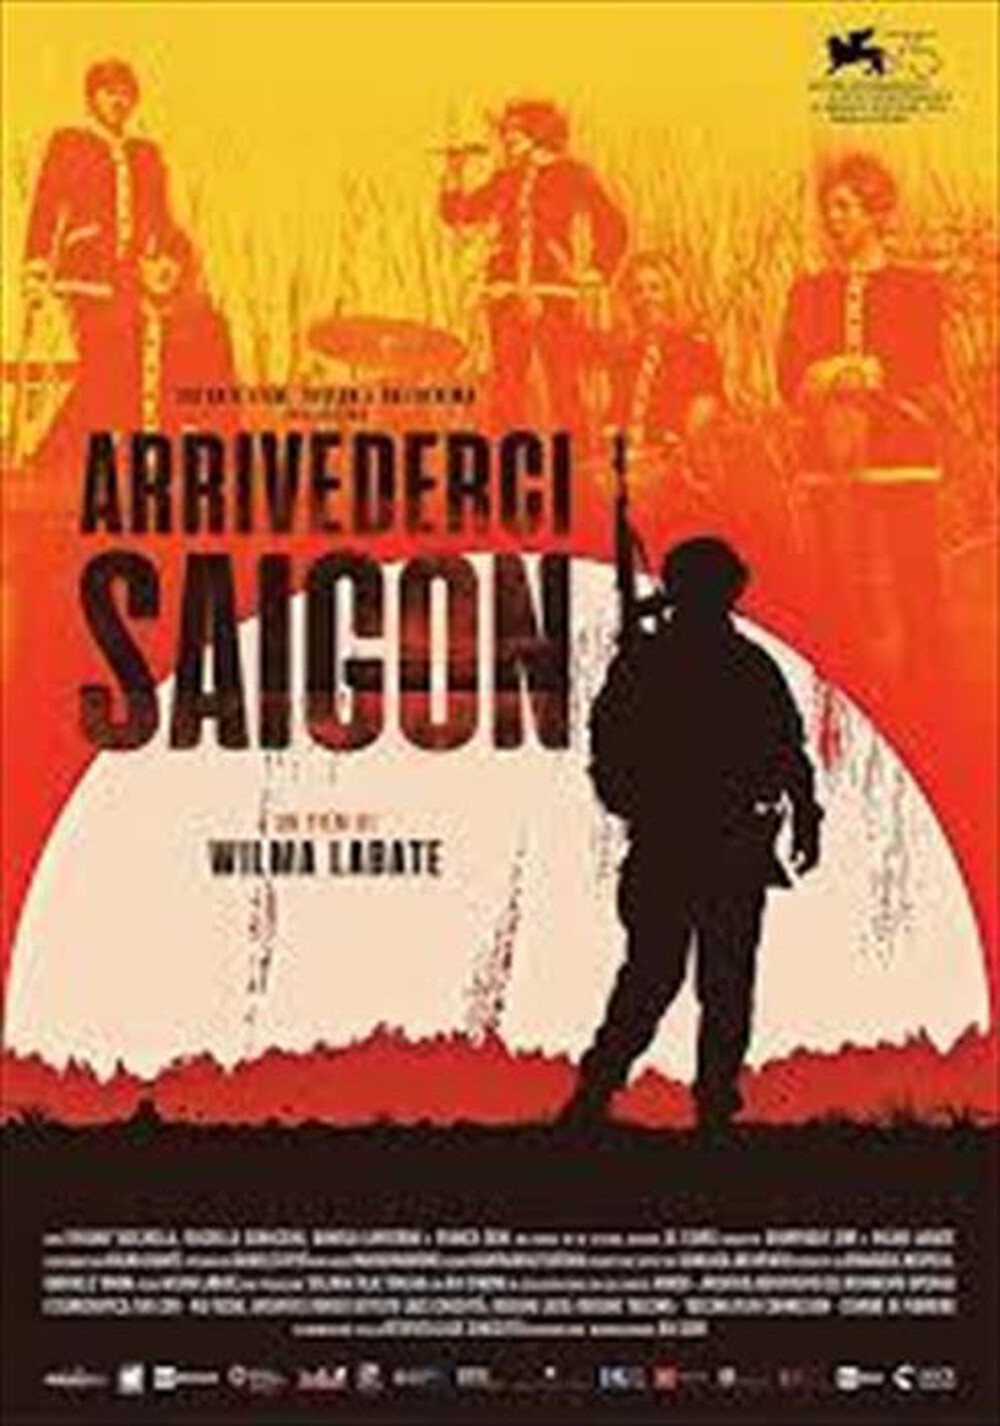 "ISTITUTO LUCE - Arrivederci Saigon"